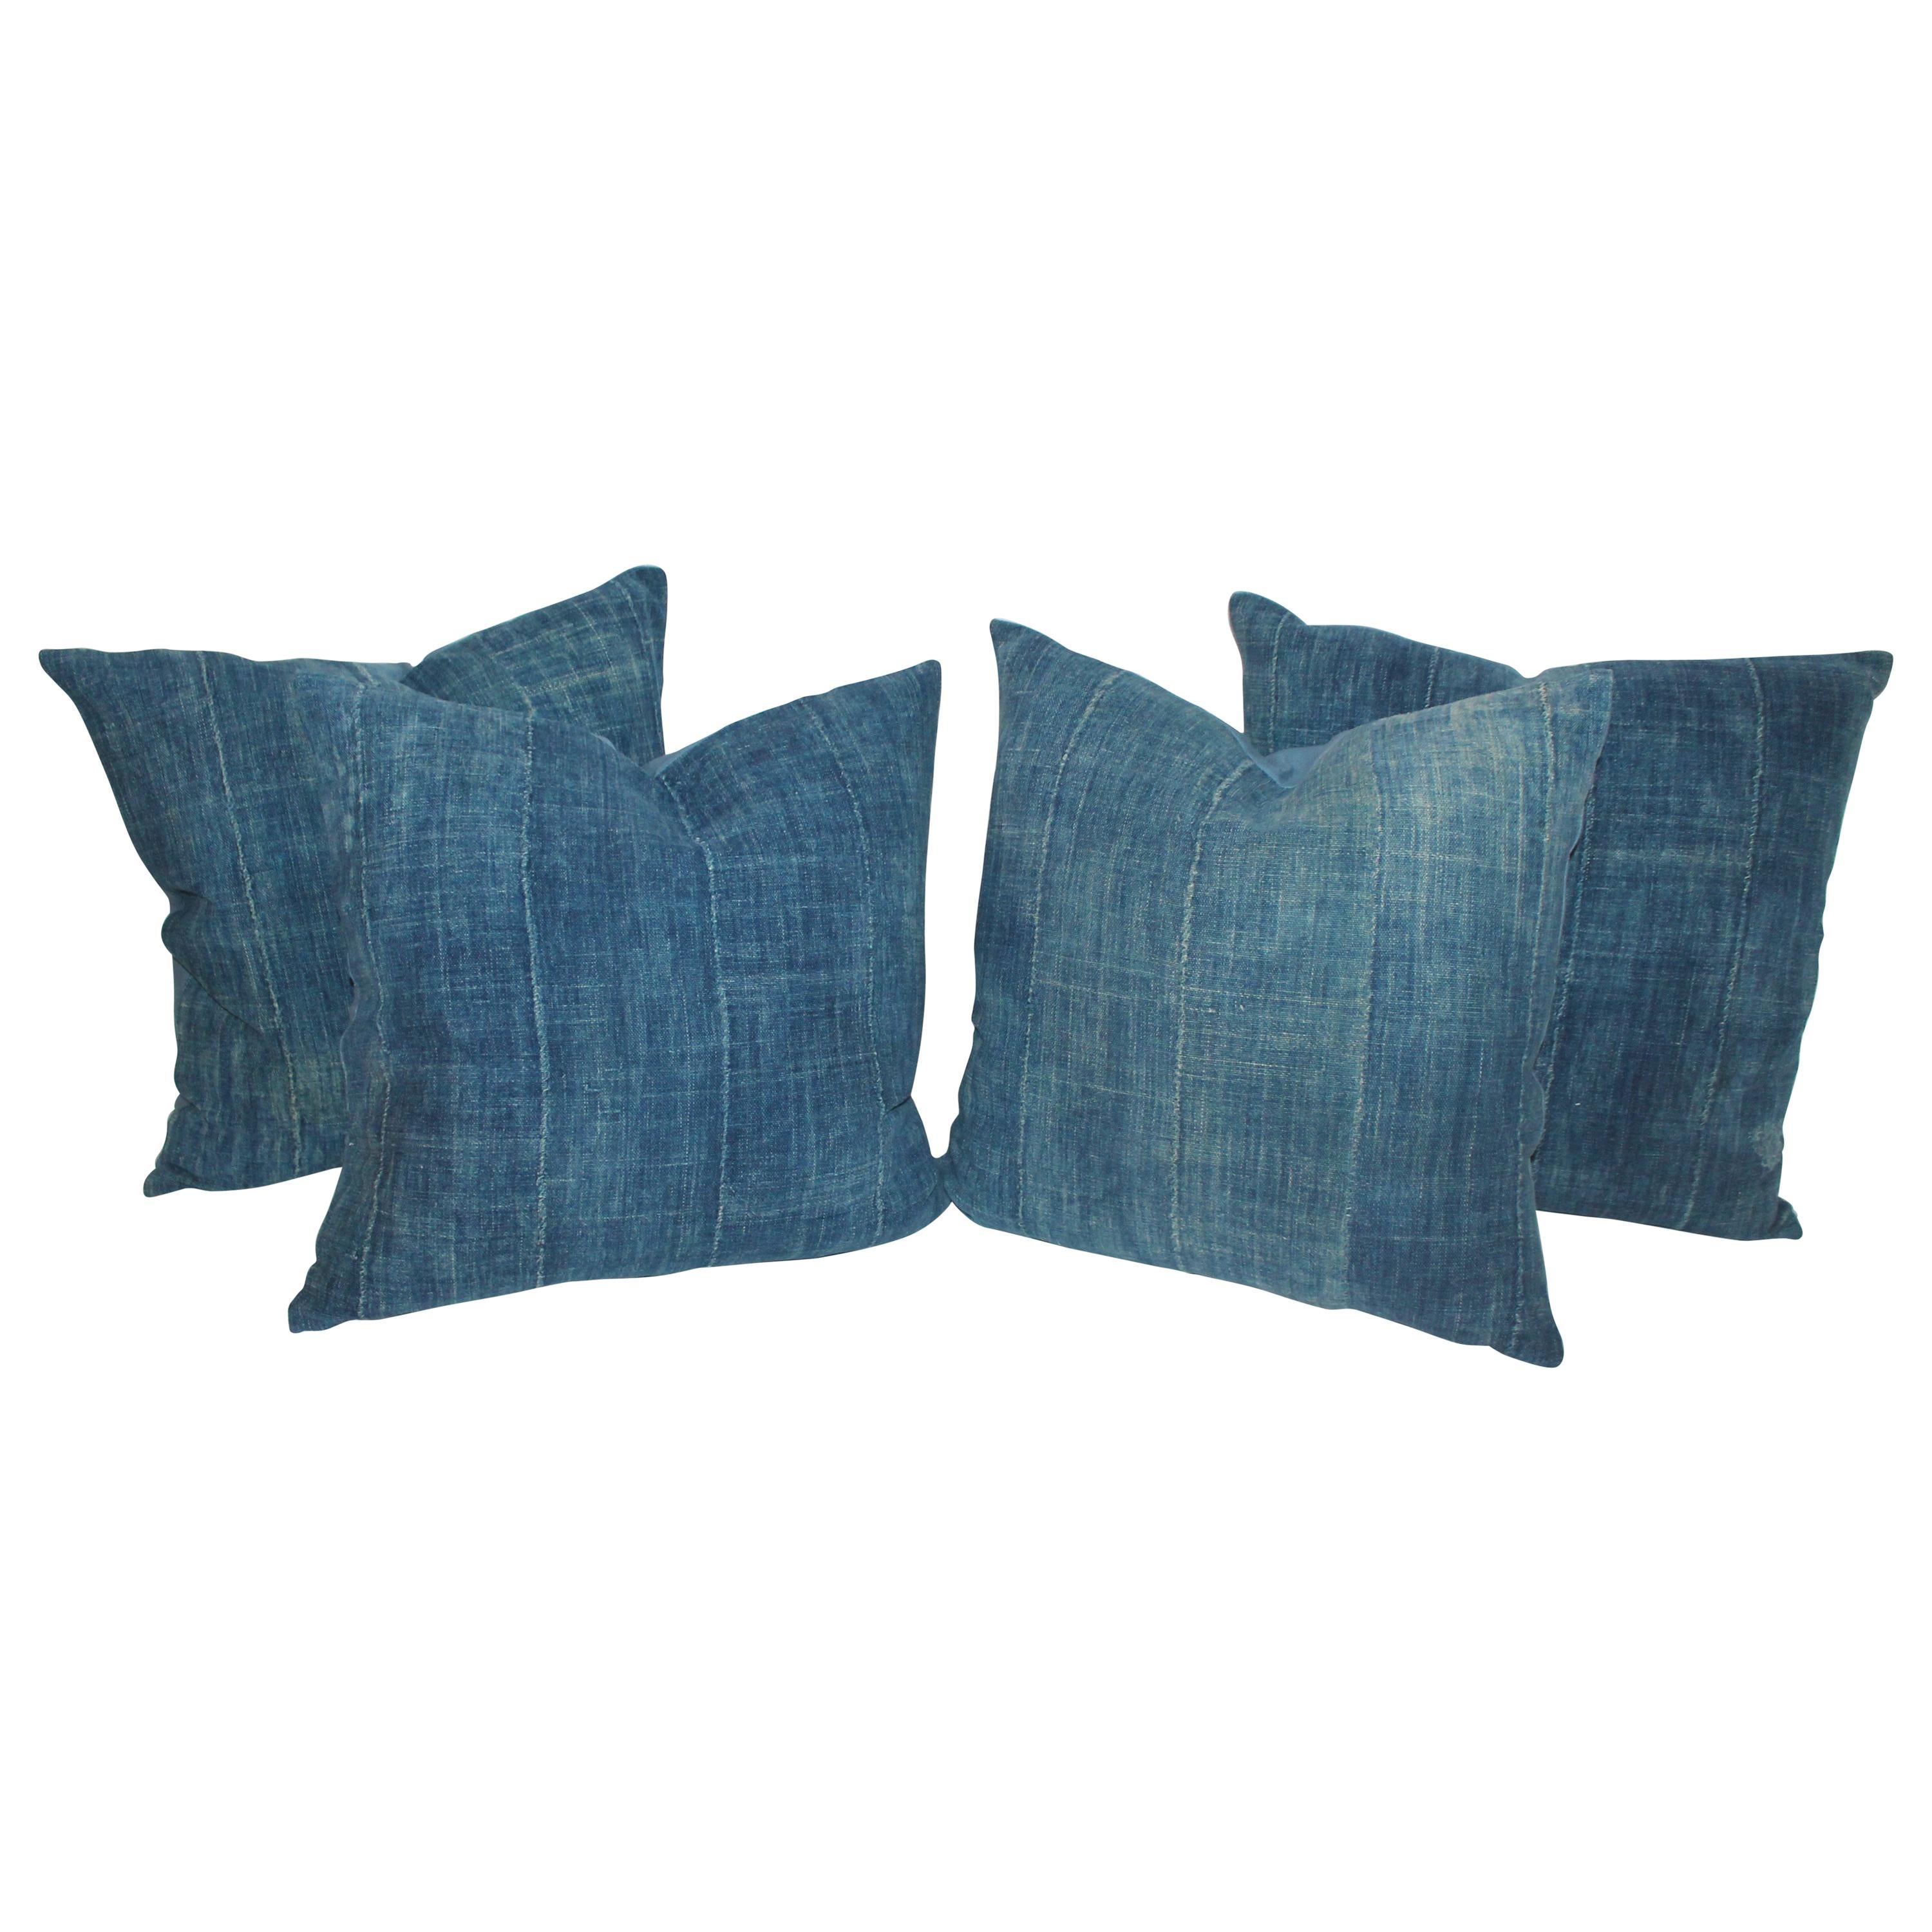 Collection of Four Blue Linen Homespun Pillows Set of 4